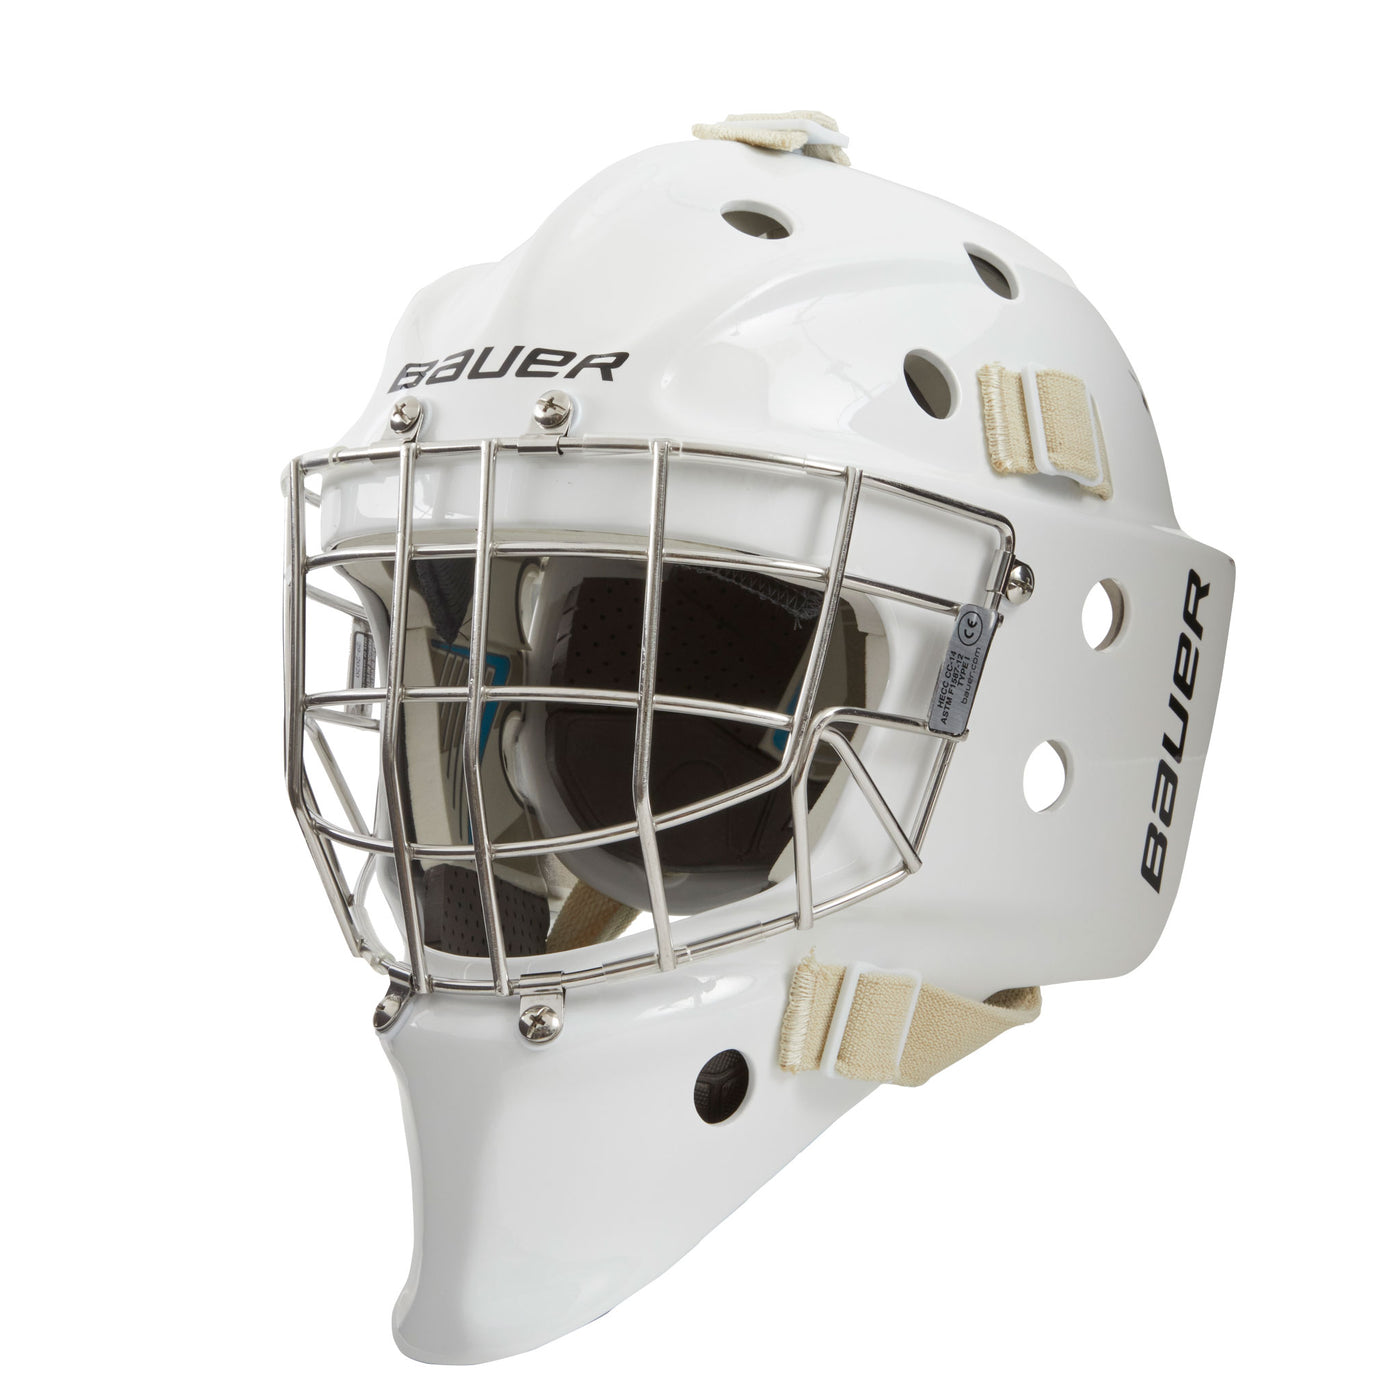 BAUER 950 Goalie Mask - SR (Cateye)